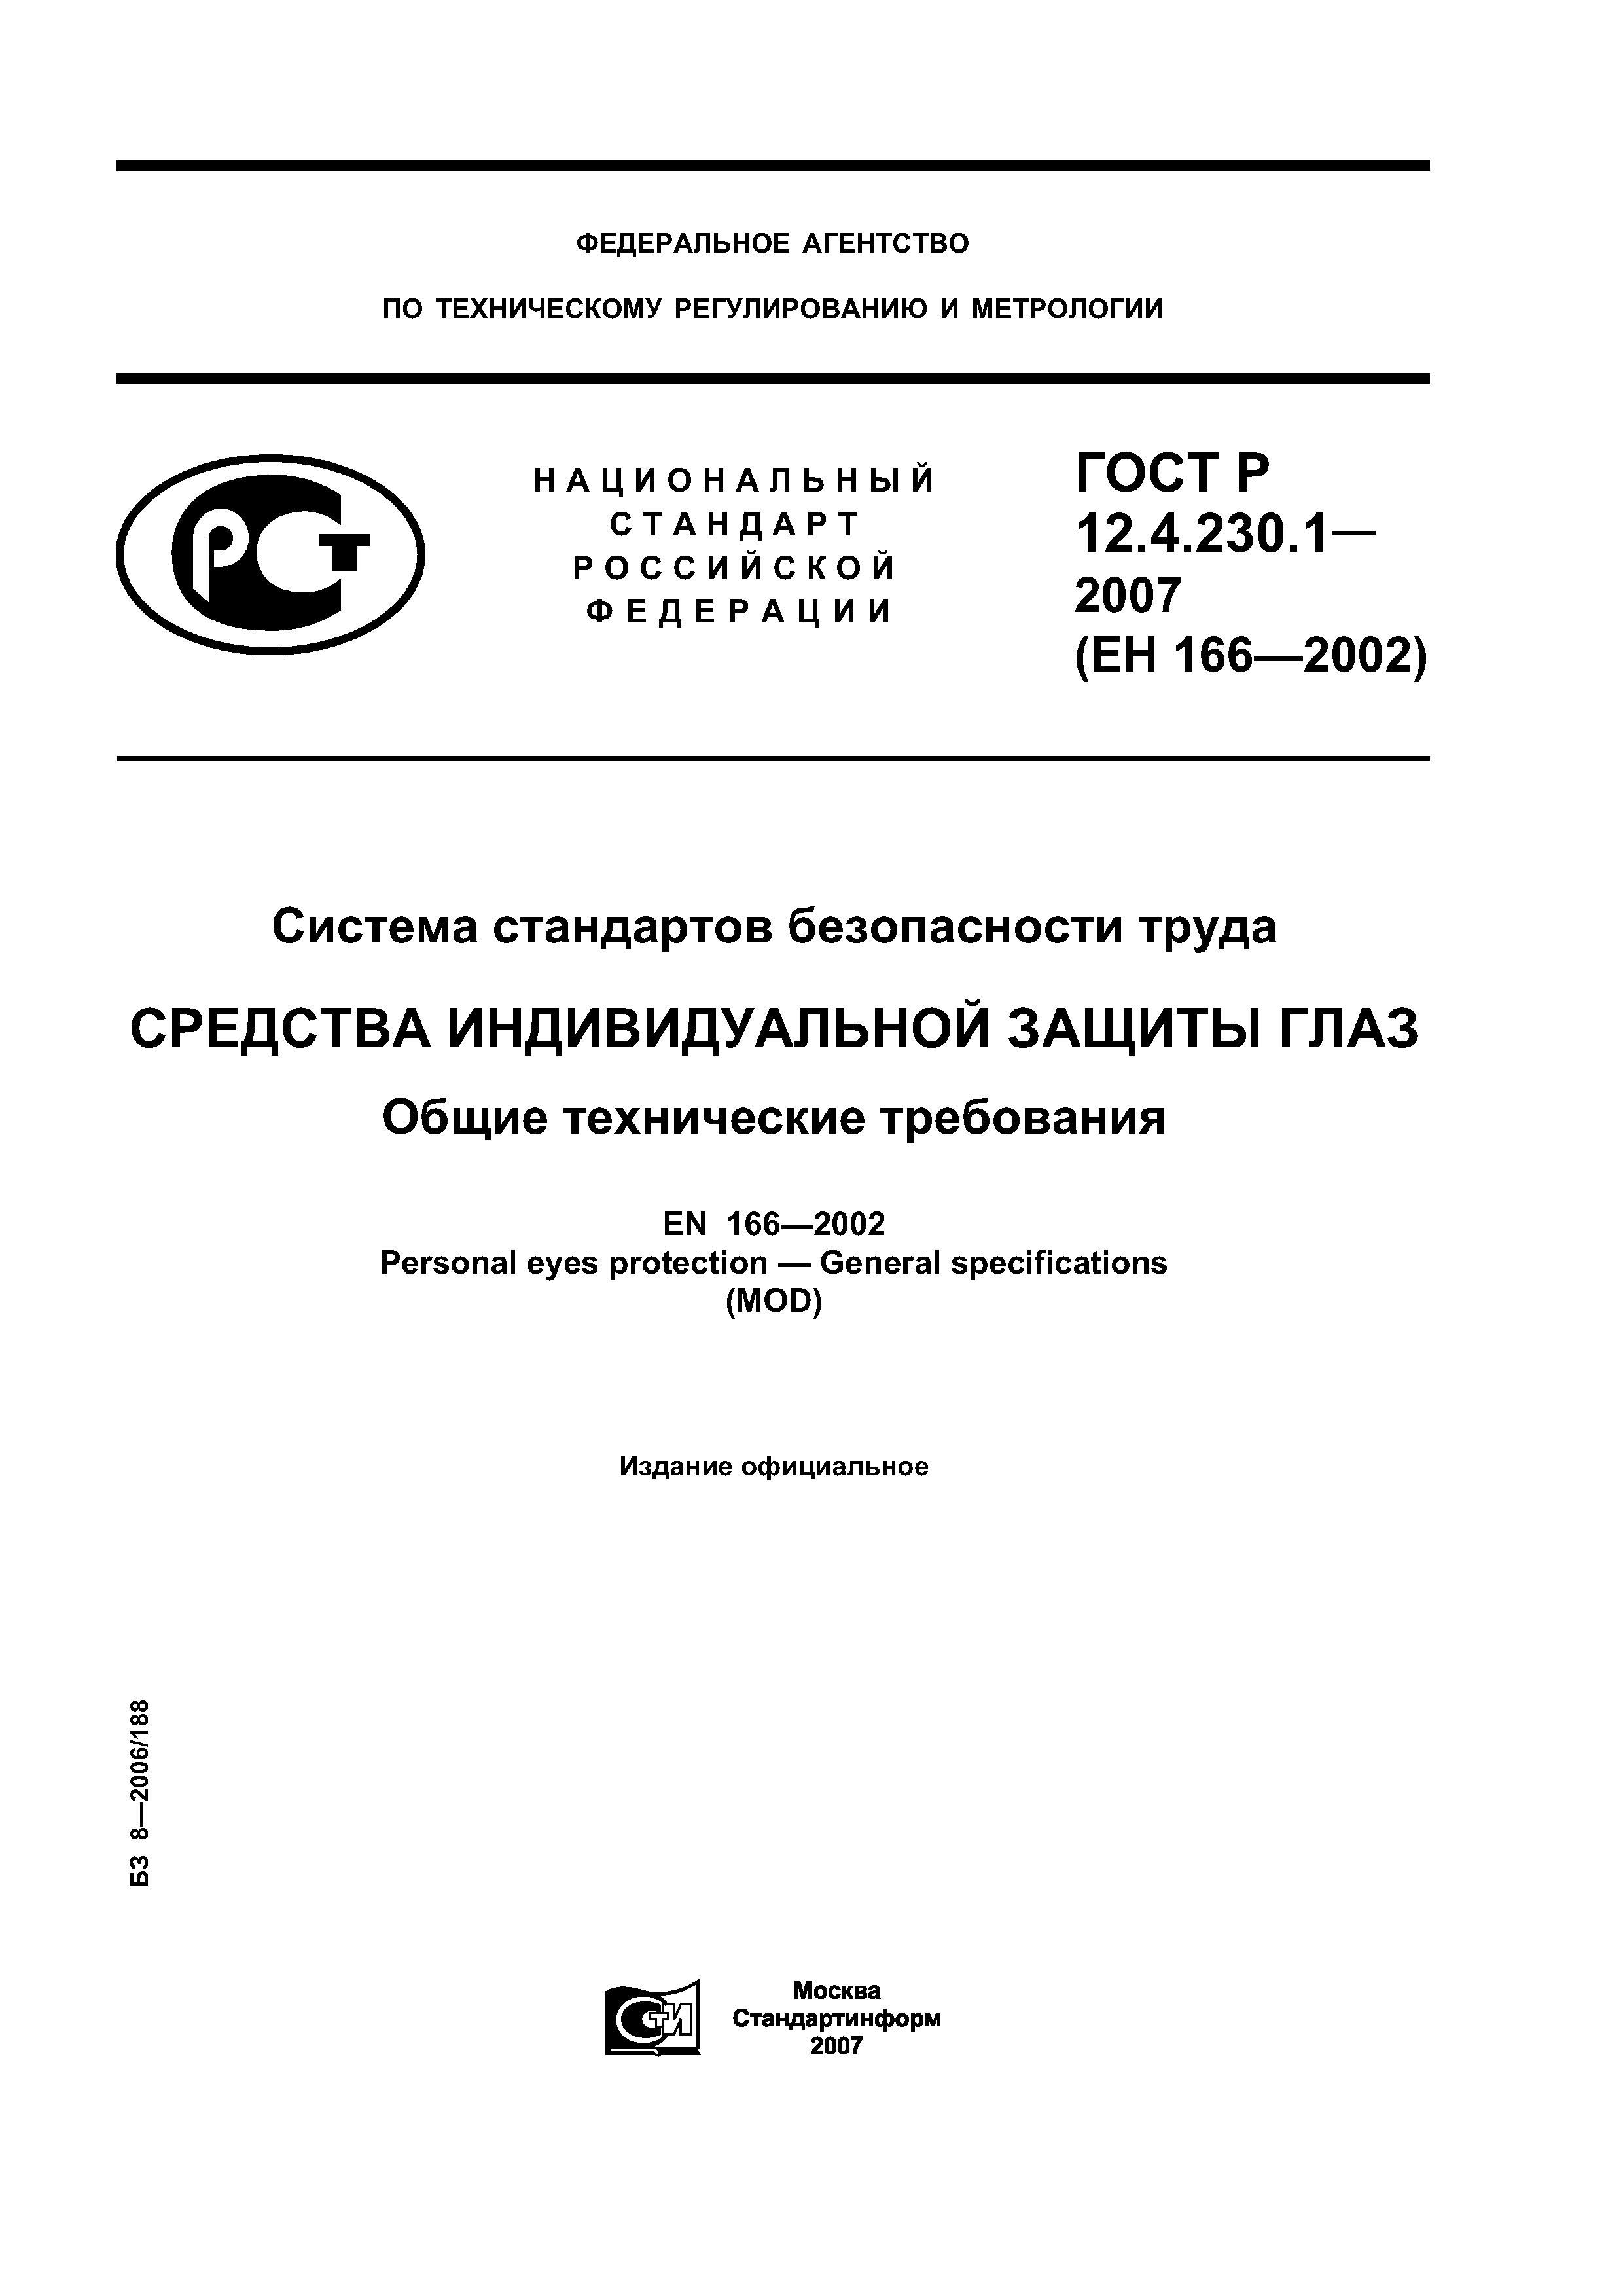 ГОСТ Р 12.4.230.1-2007